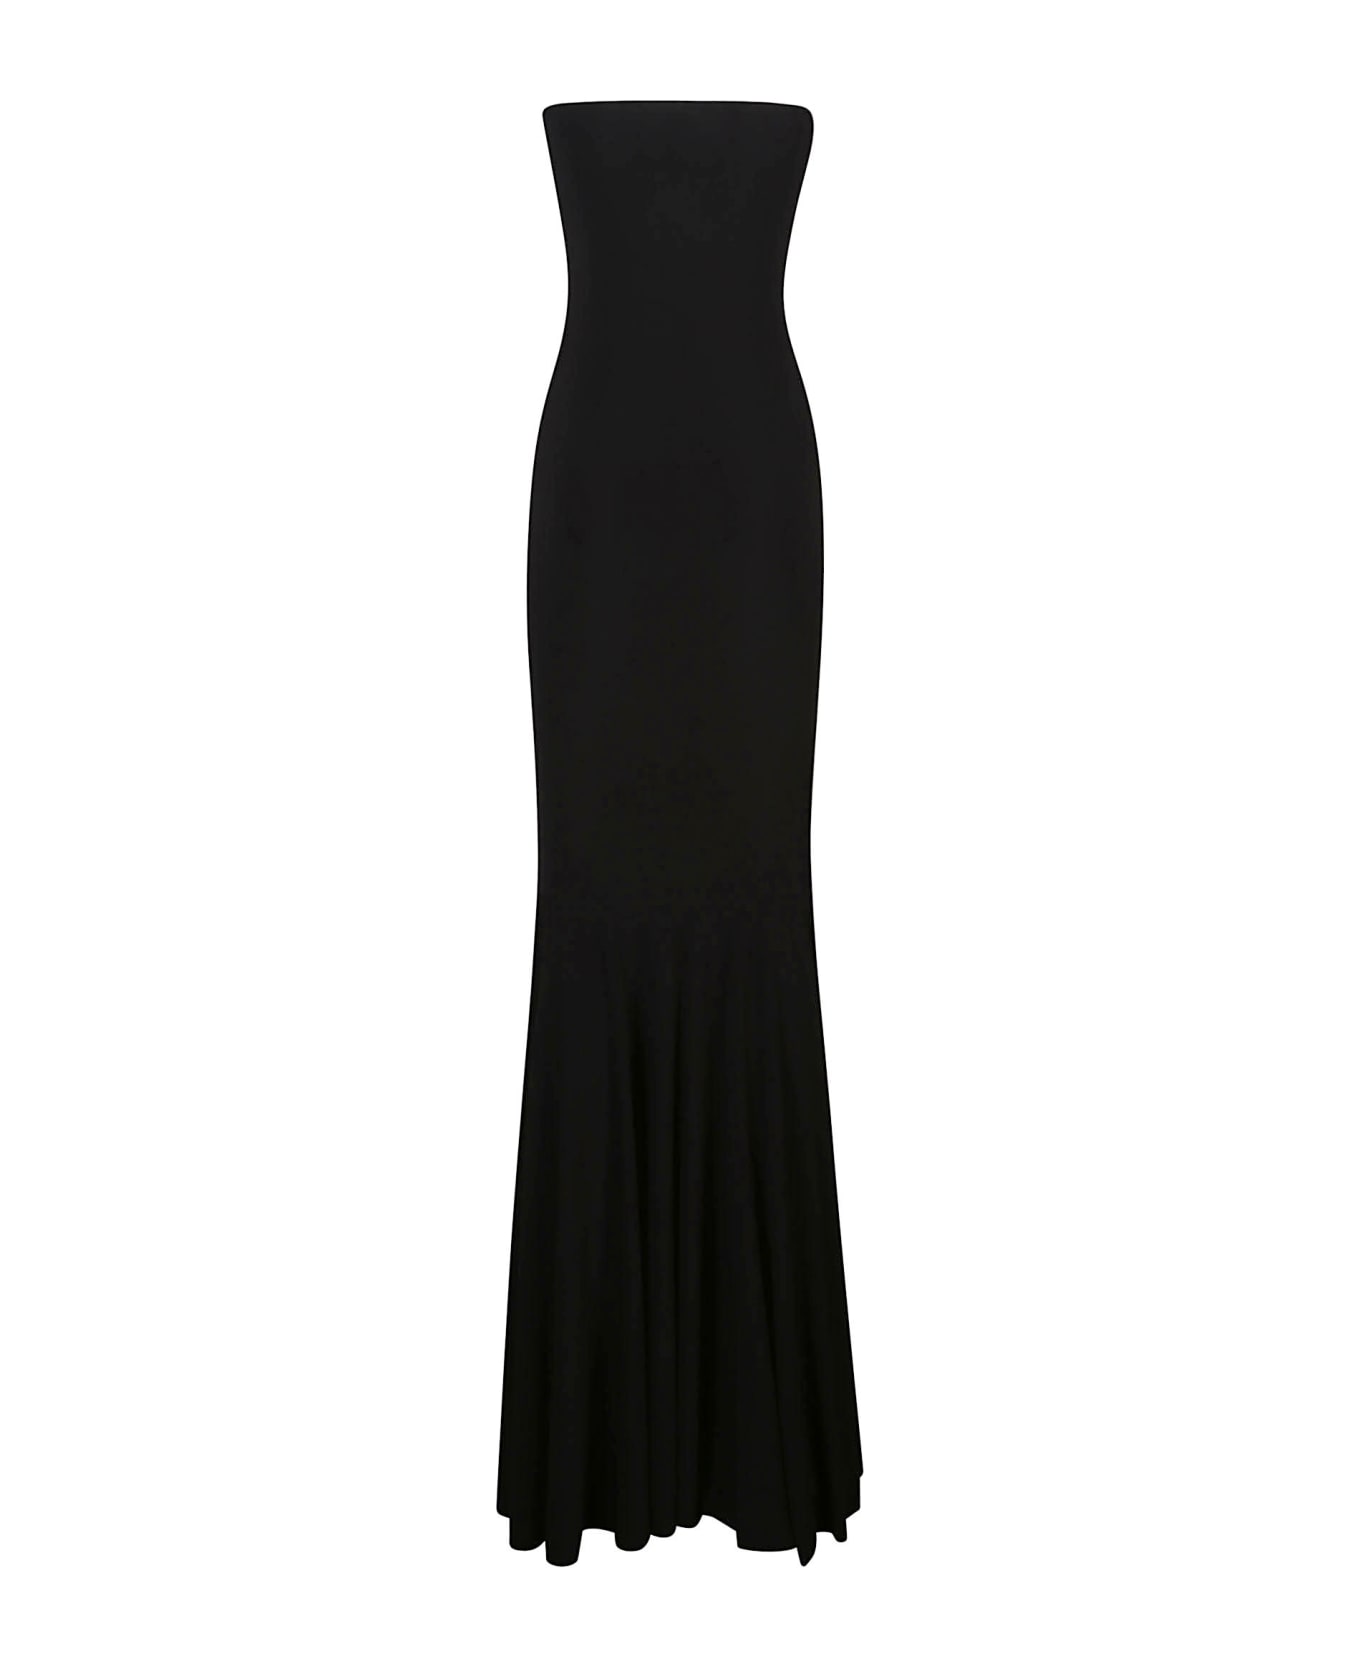 Norma Kamali Strapless Shirred Front Fishtail Dress - Black